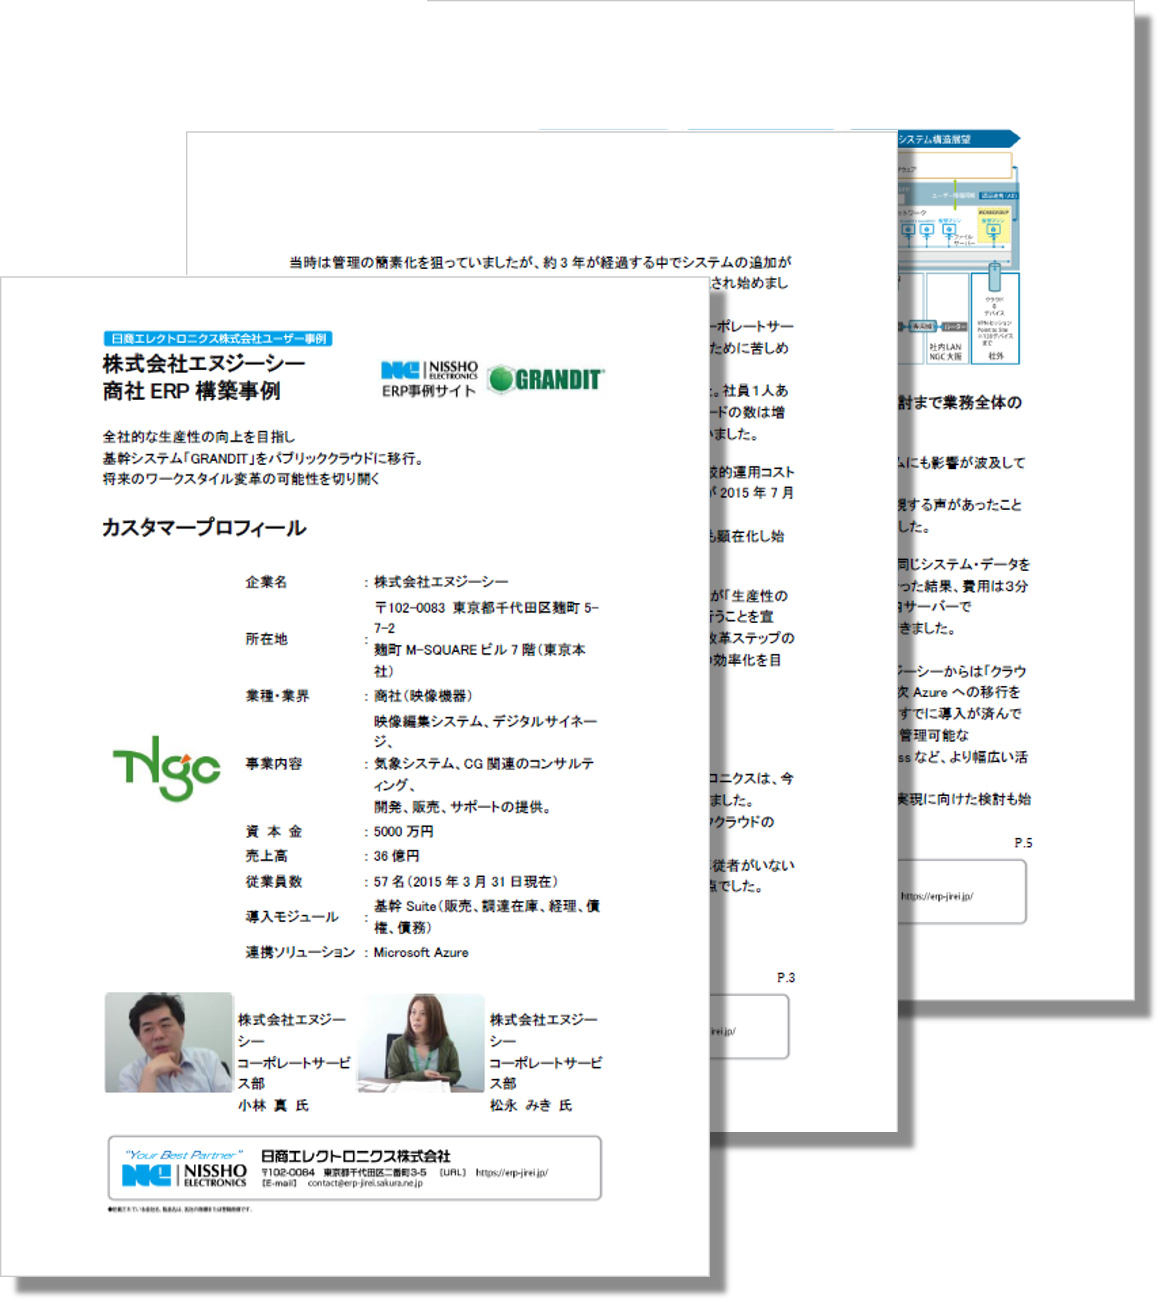 ngc usecase.03 株式会社エヌジーシー様 (IT商社)